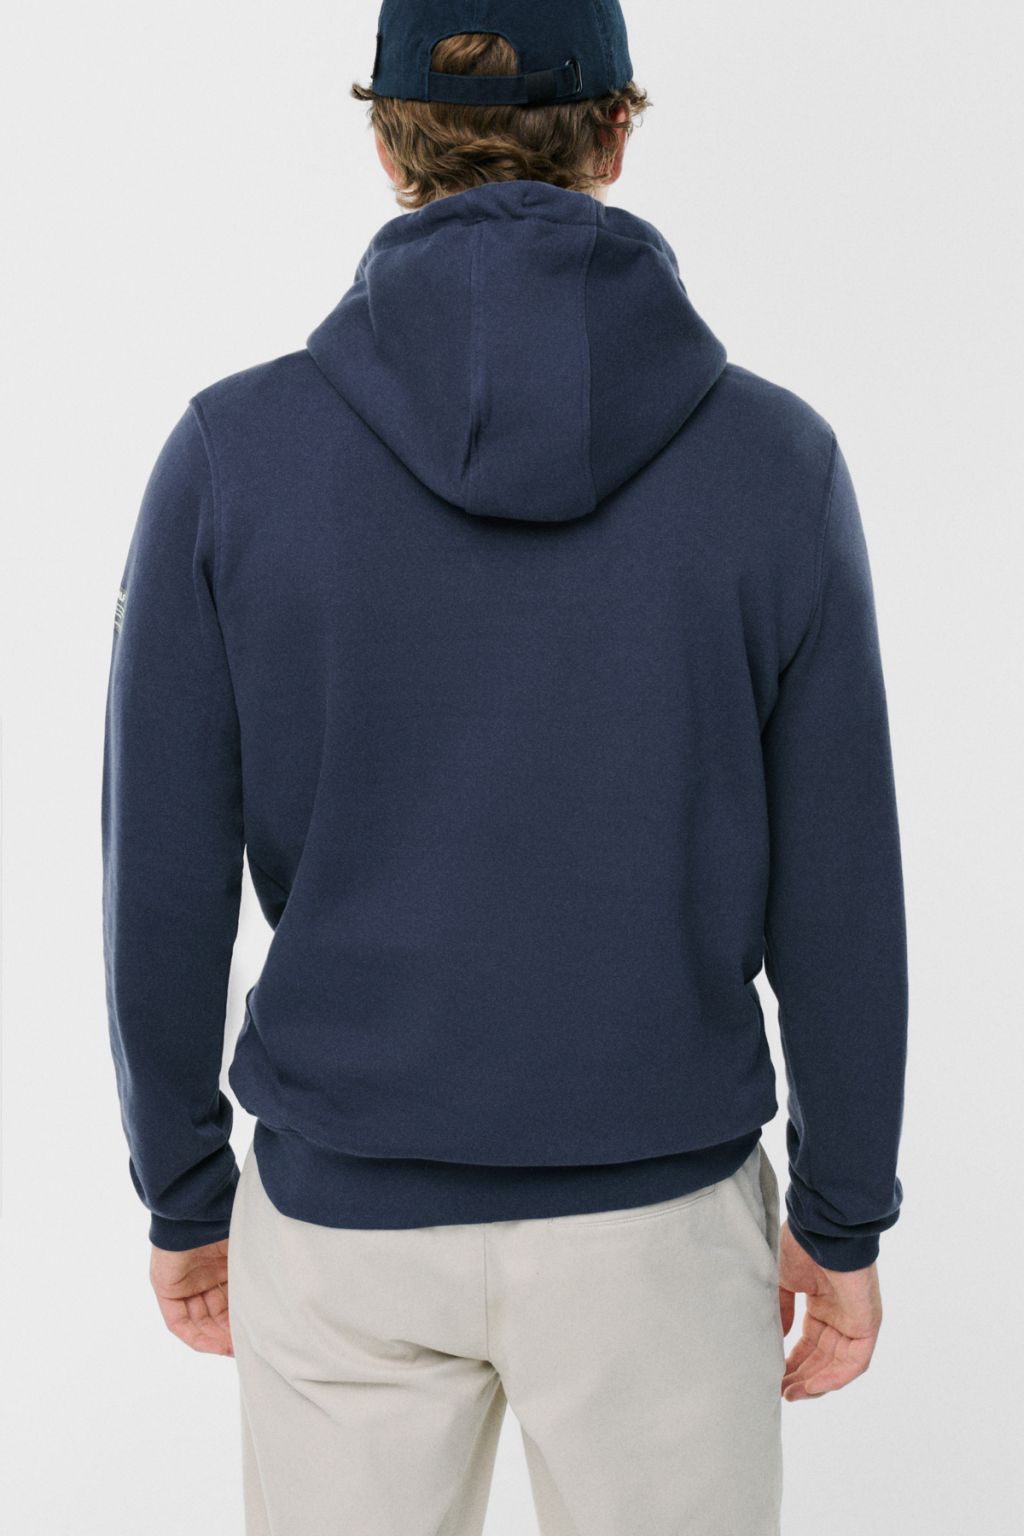 Lutaalf Hoodie-Sweatshirt Man deep navy XL